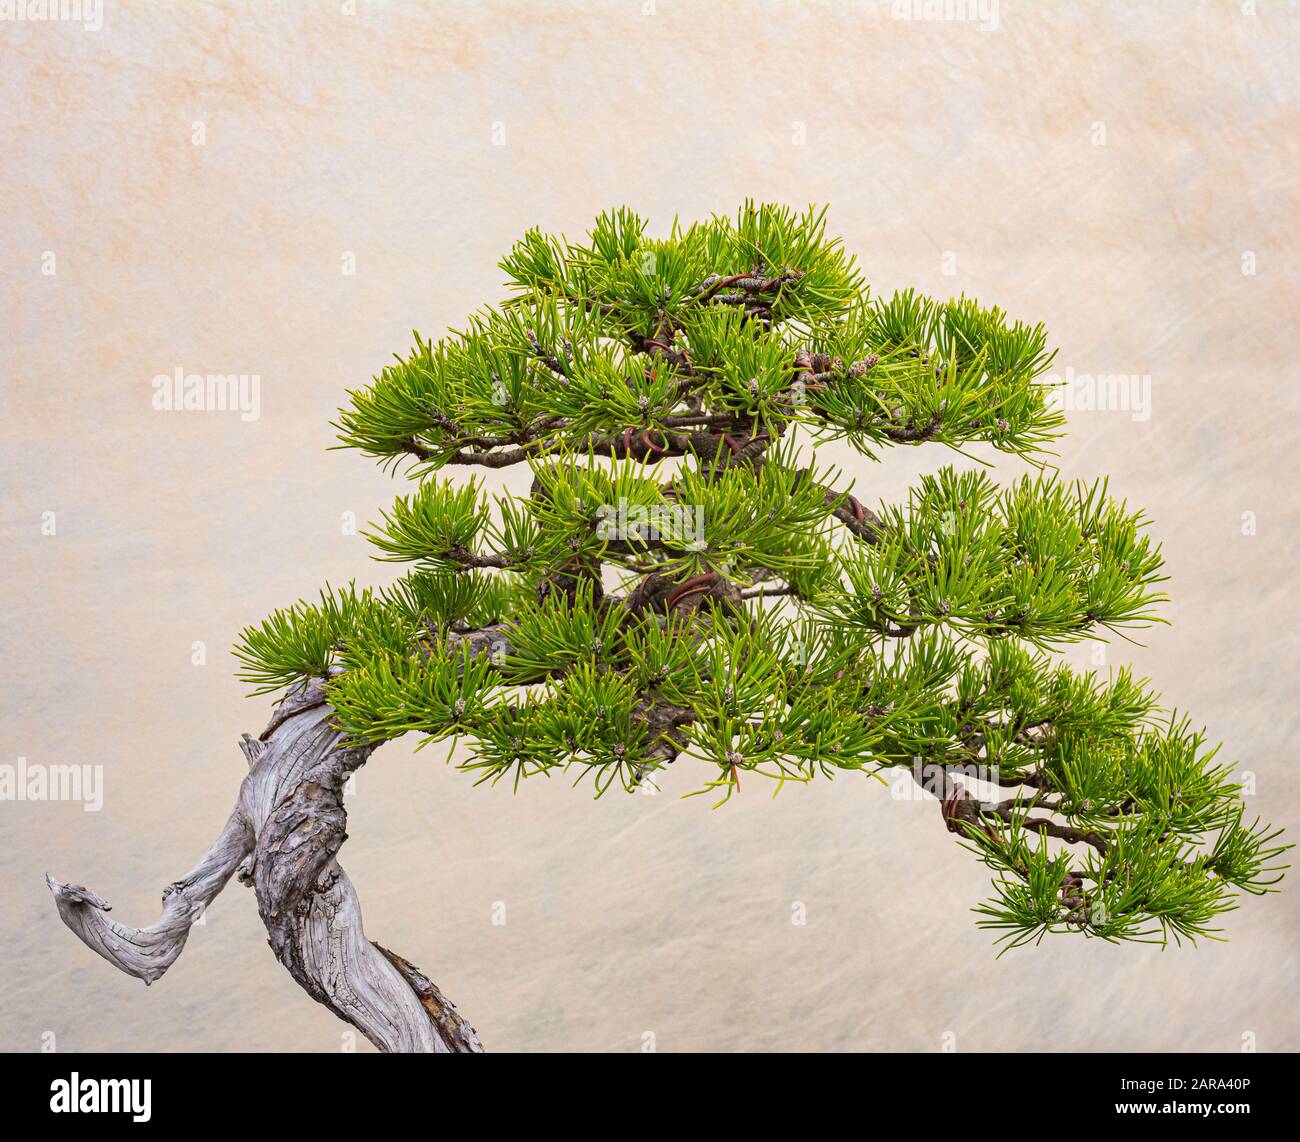 Ein kleiner Bonsai-Baum in einem Keramiktopf. Bonsai Pinus ponderosa (Ponderosa-Kiefer) Stockfoto